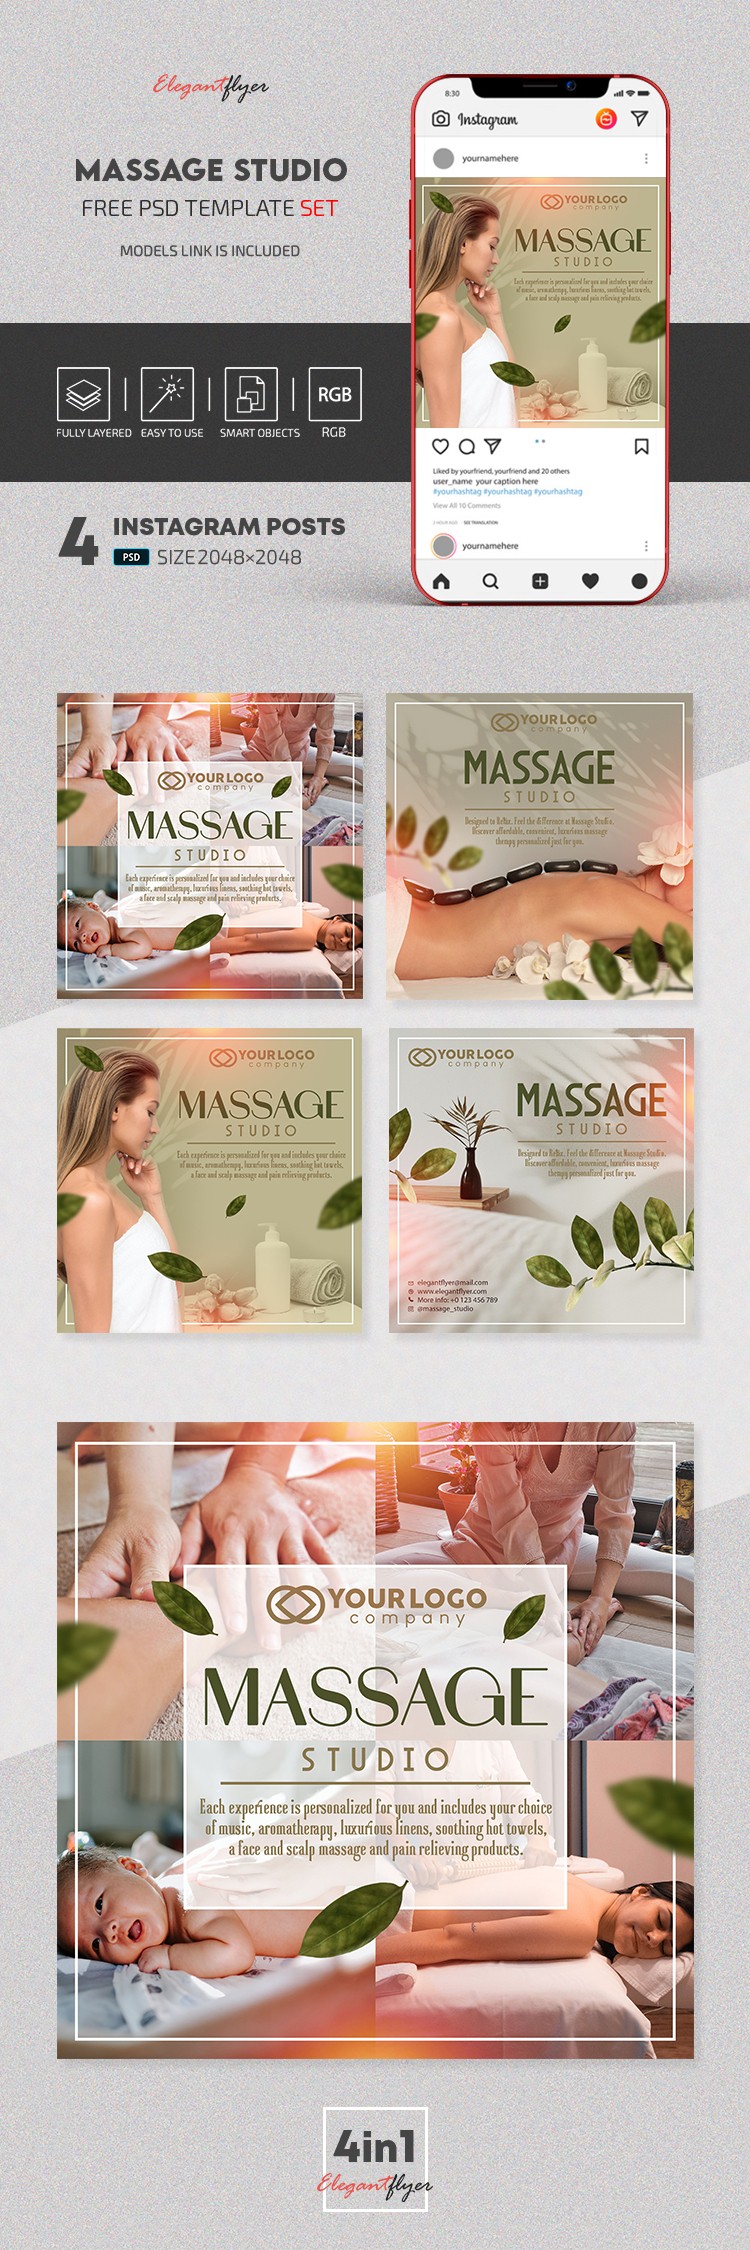 Estúdio de Massagem no Instagram by ElegantFlyer